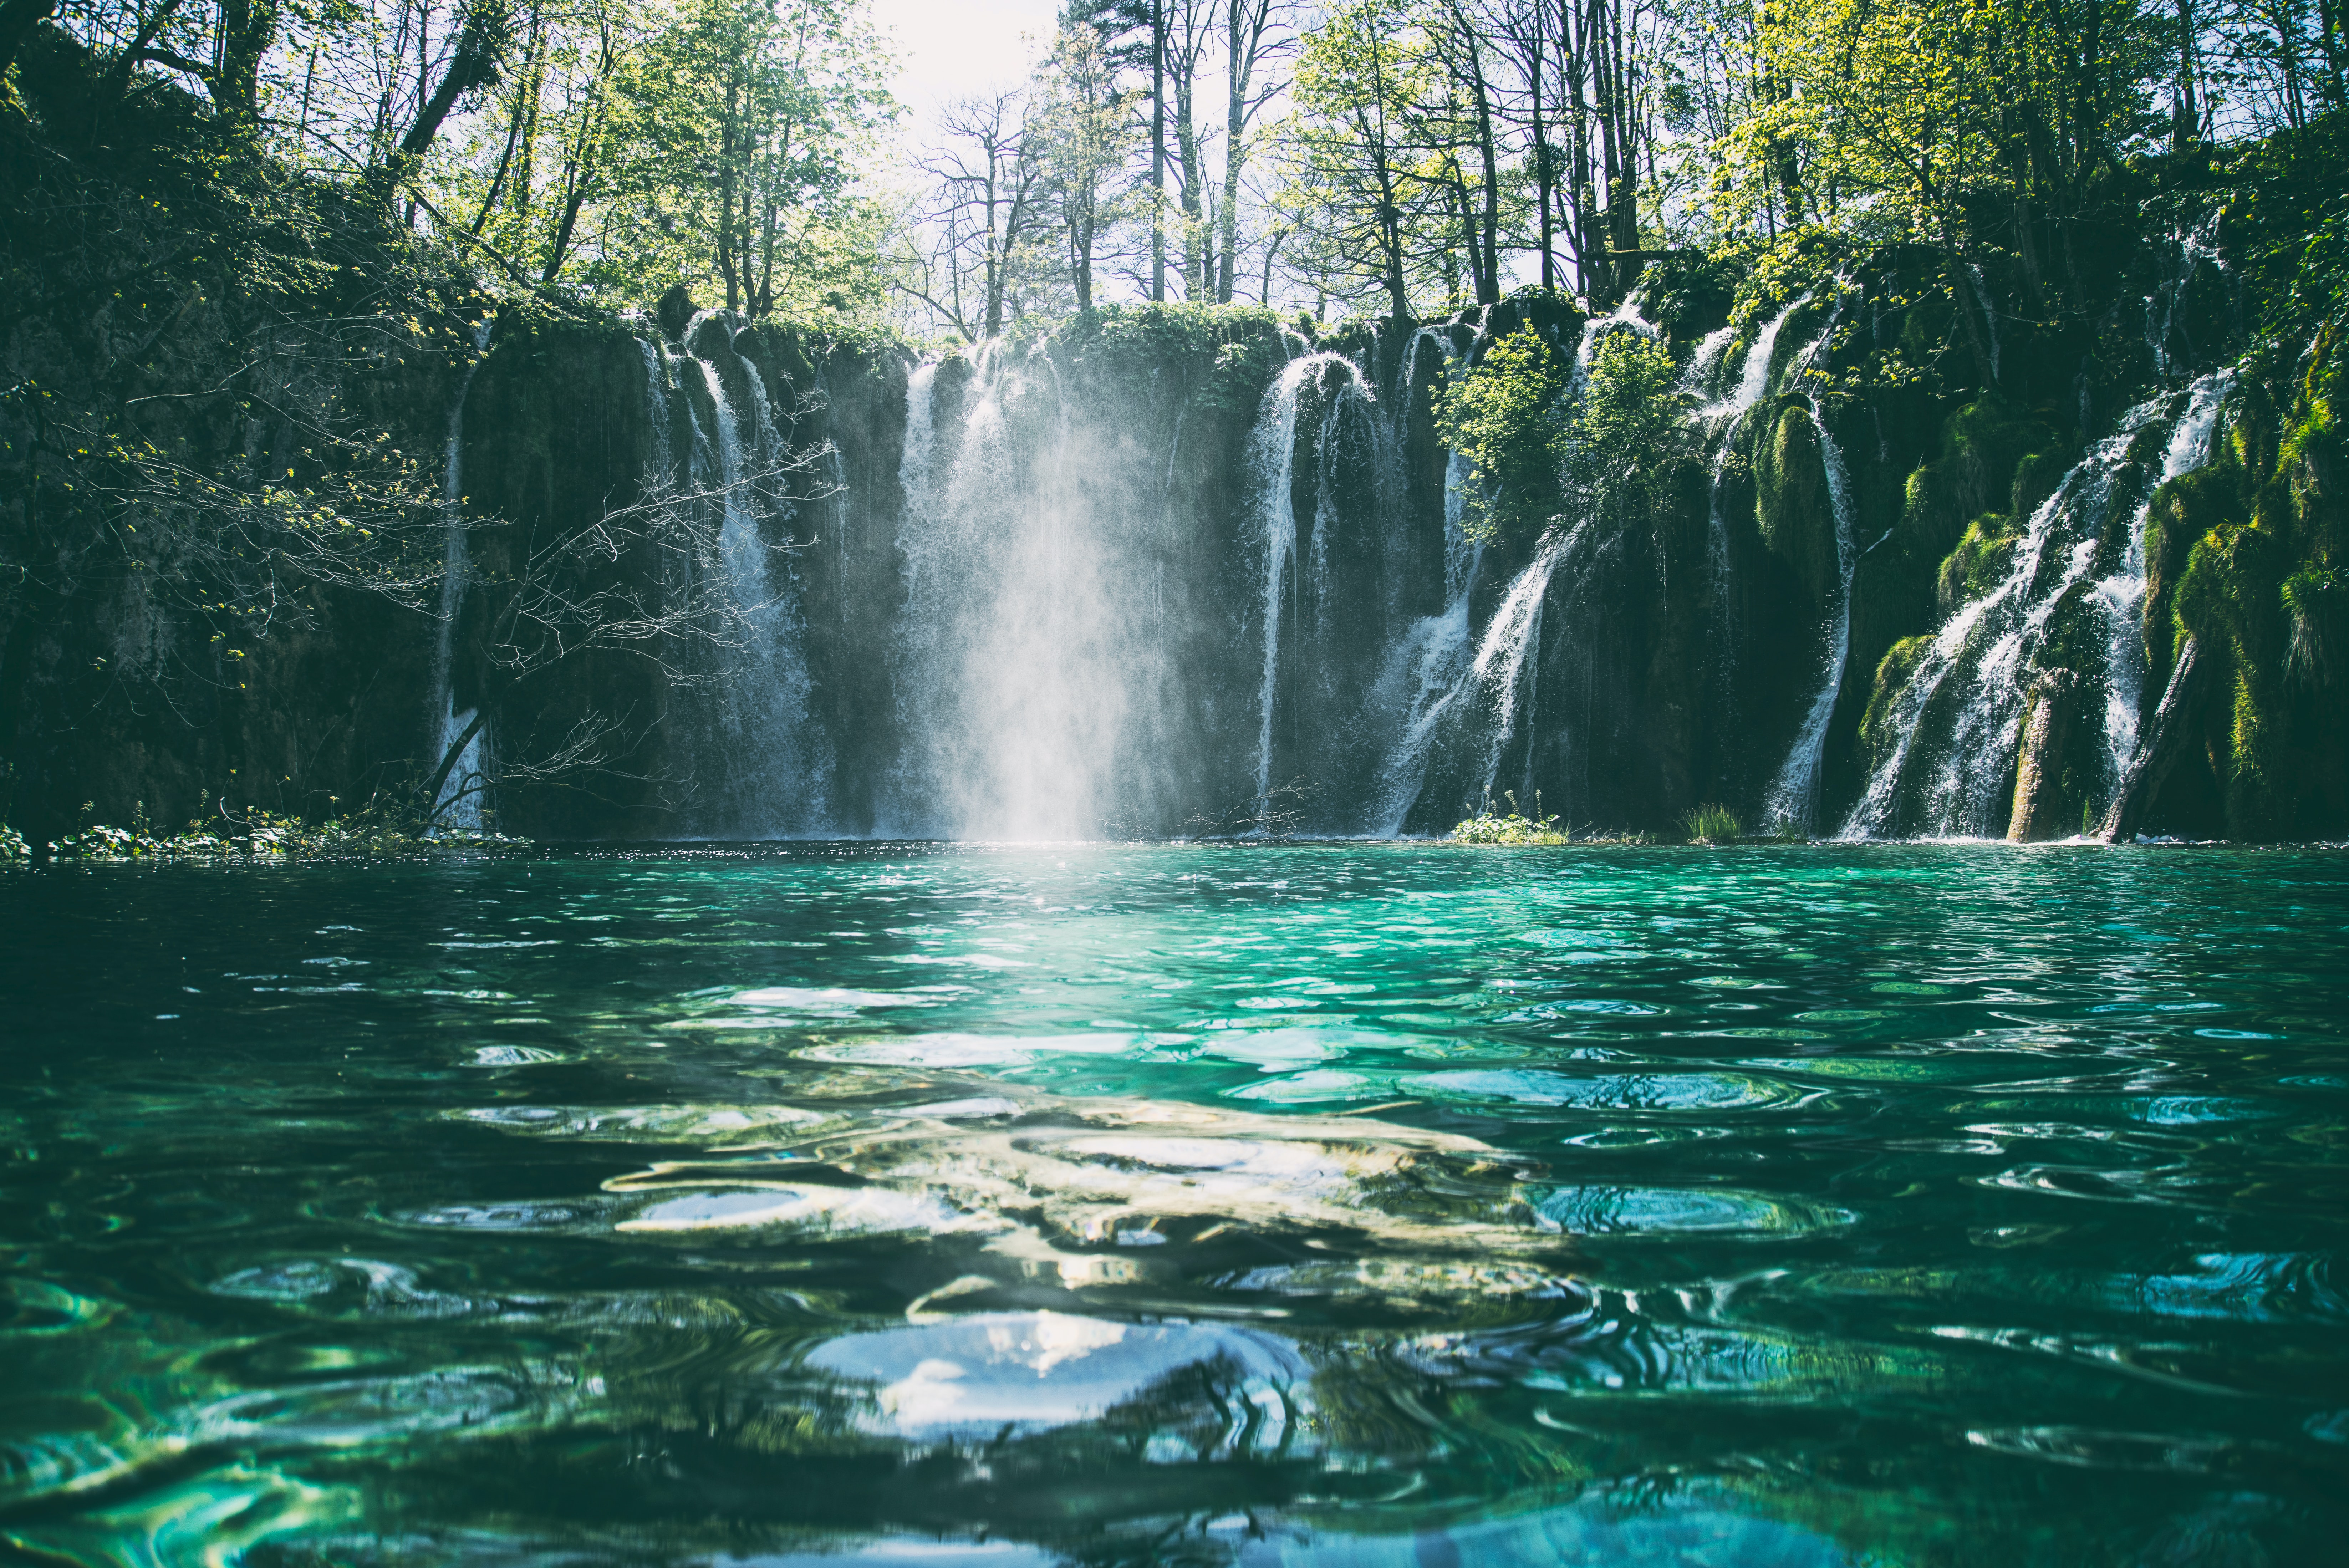 waterfall of cleansing energy